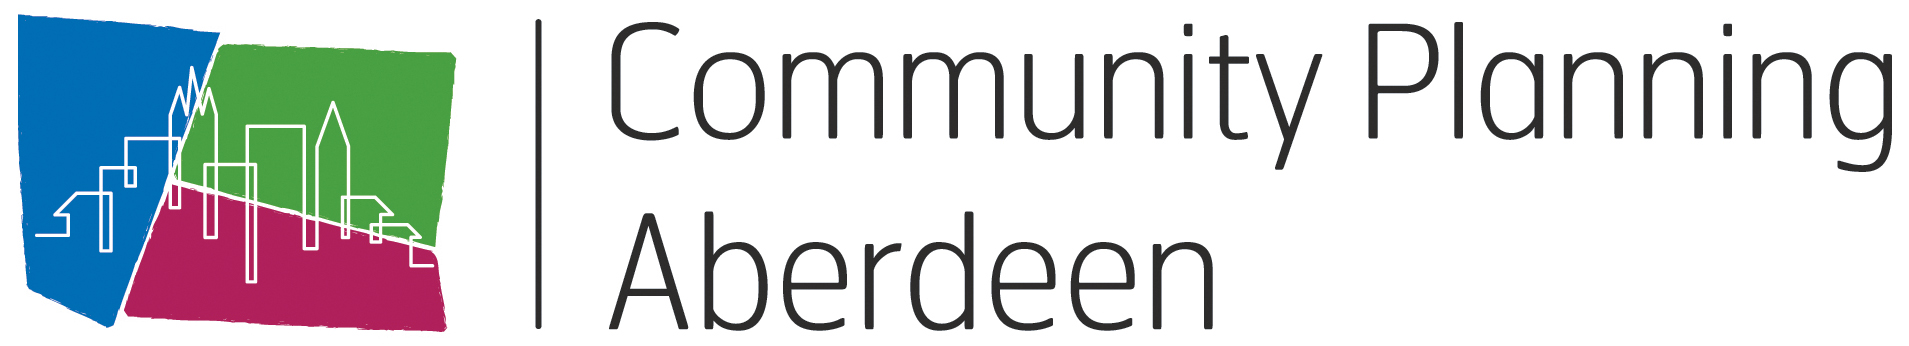 Community Planning Aberdeen Logo 